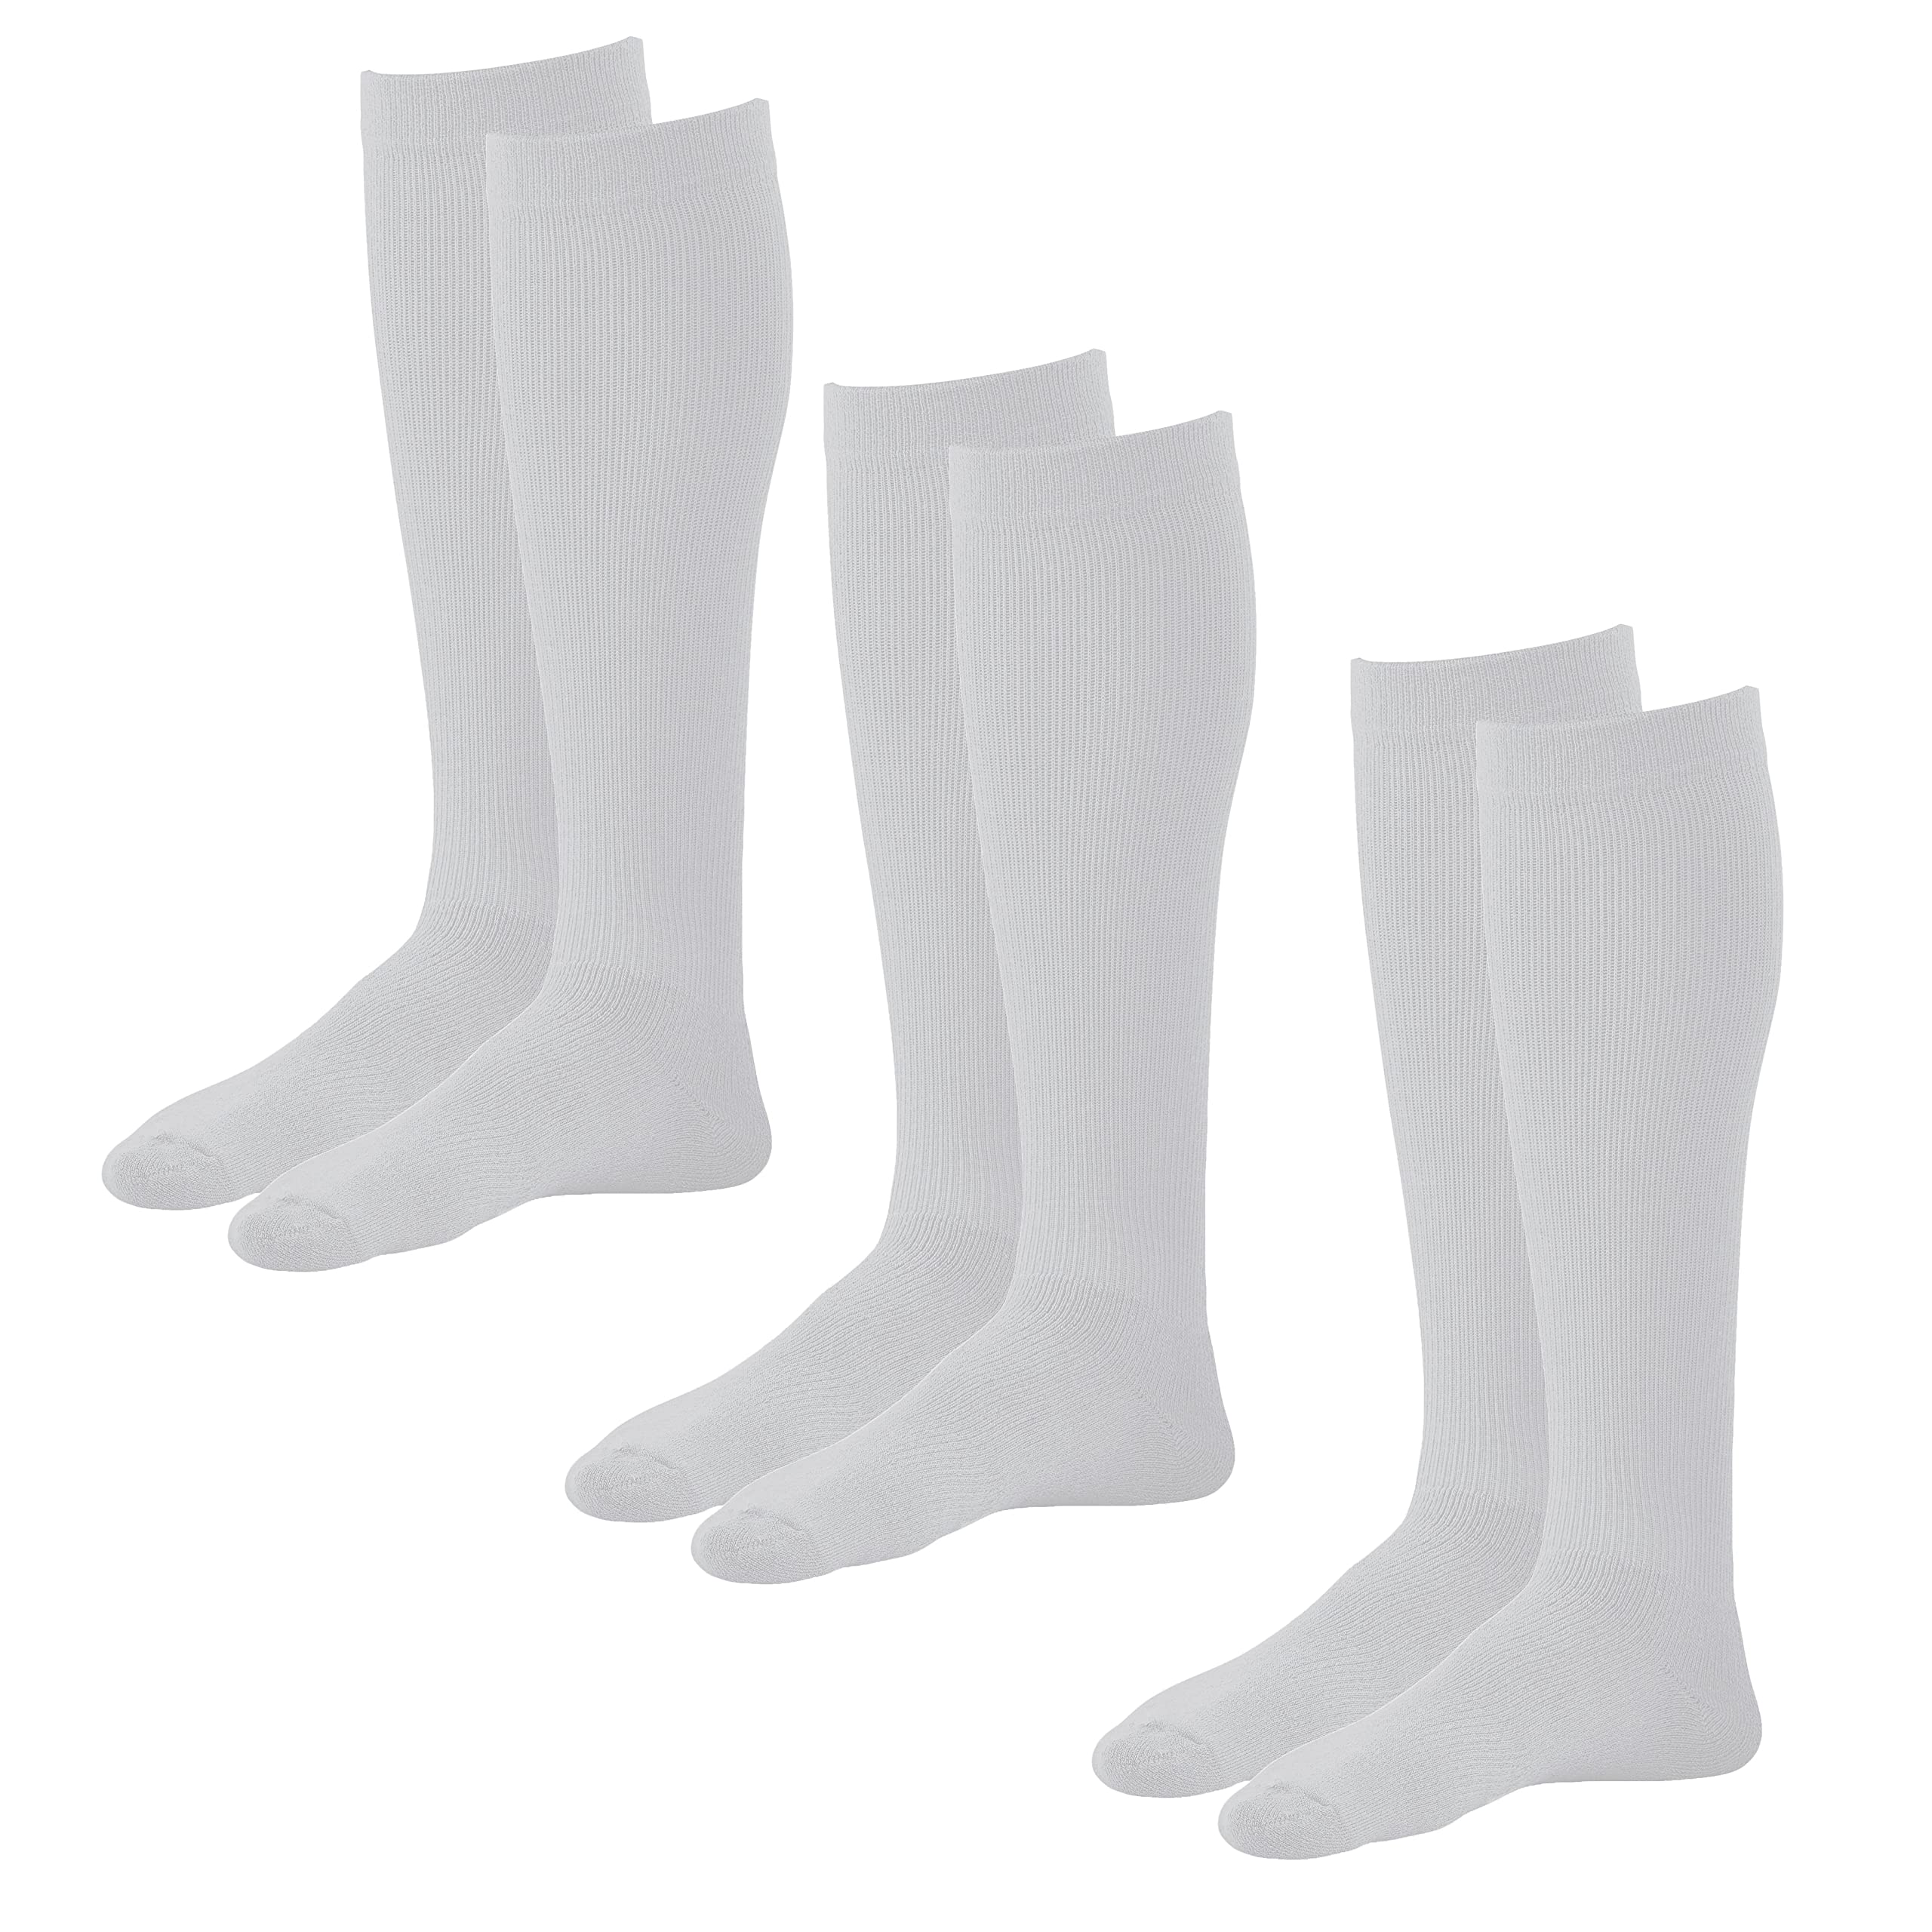 Ames Walker AW Style 632 Diabetic 8-15 mmHg Mild Compression Knee High Socks (3-Pack) Medium White